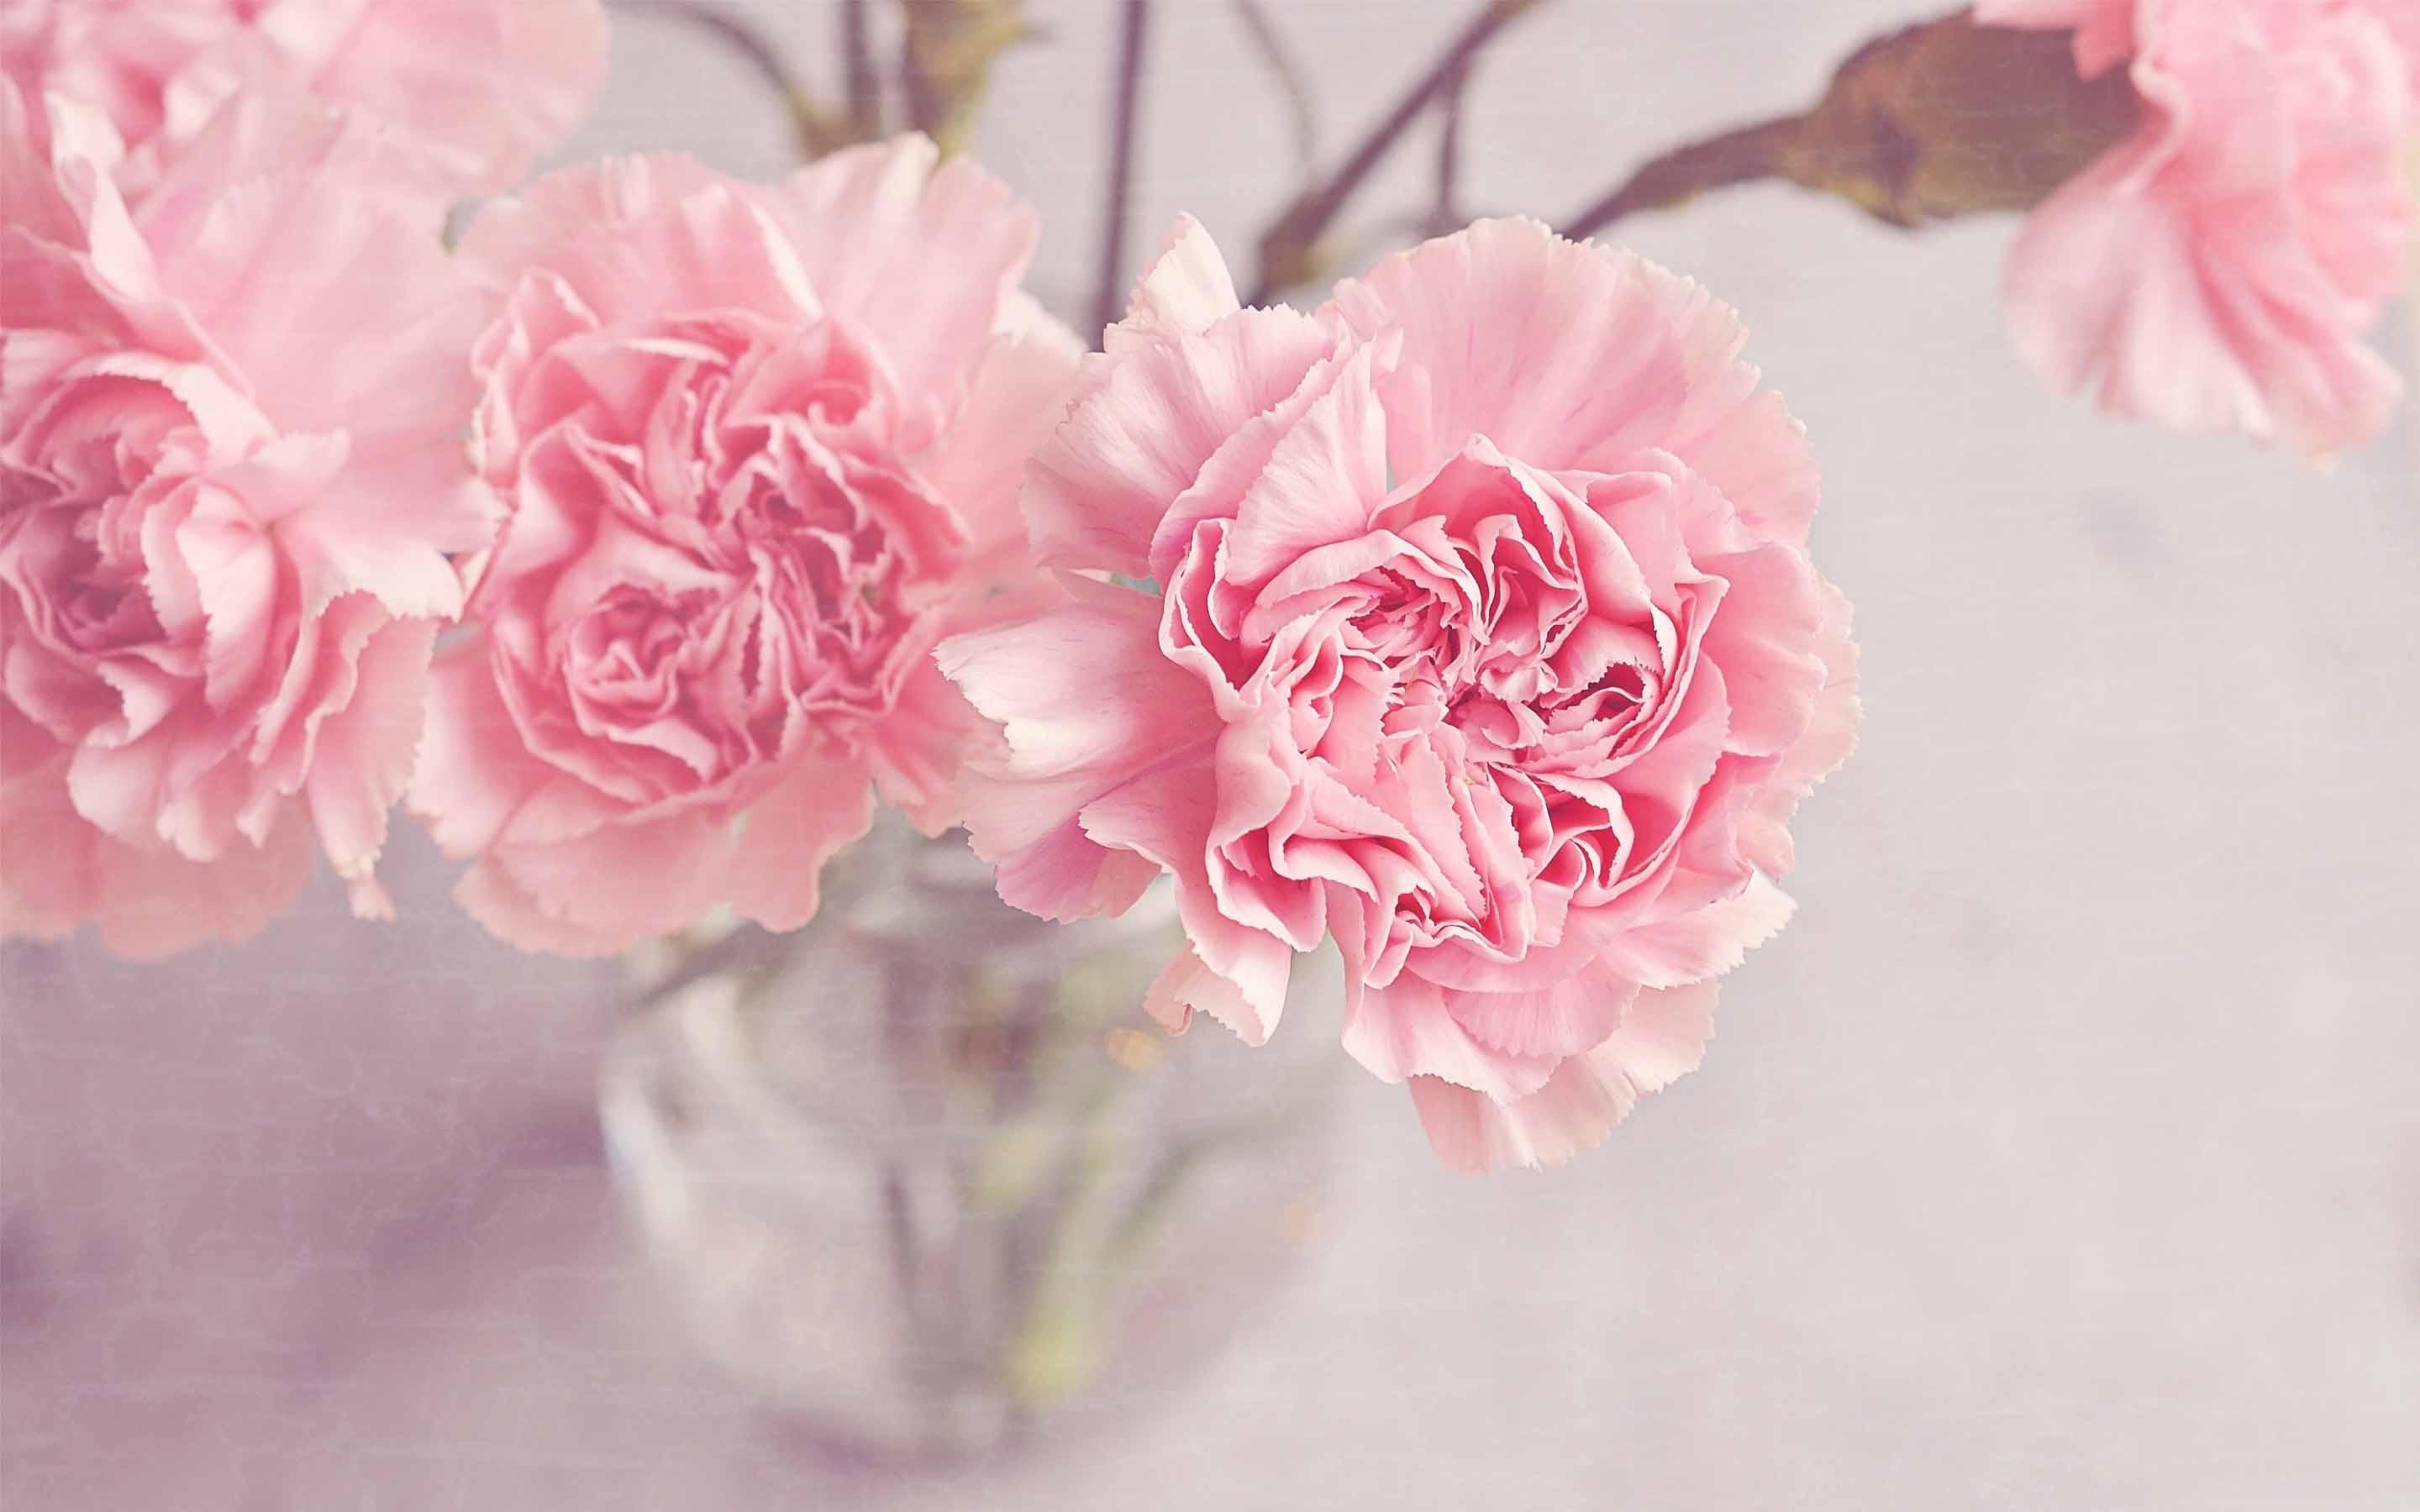 Light Pink Carnation Flowers Mac Wallpaper Download